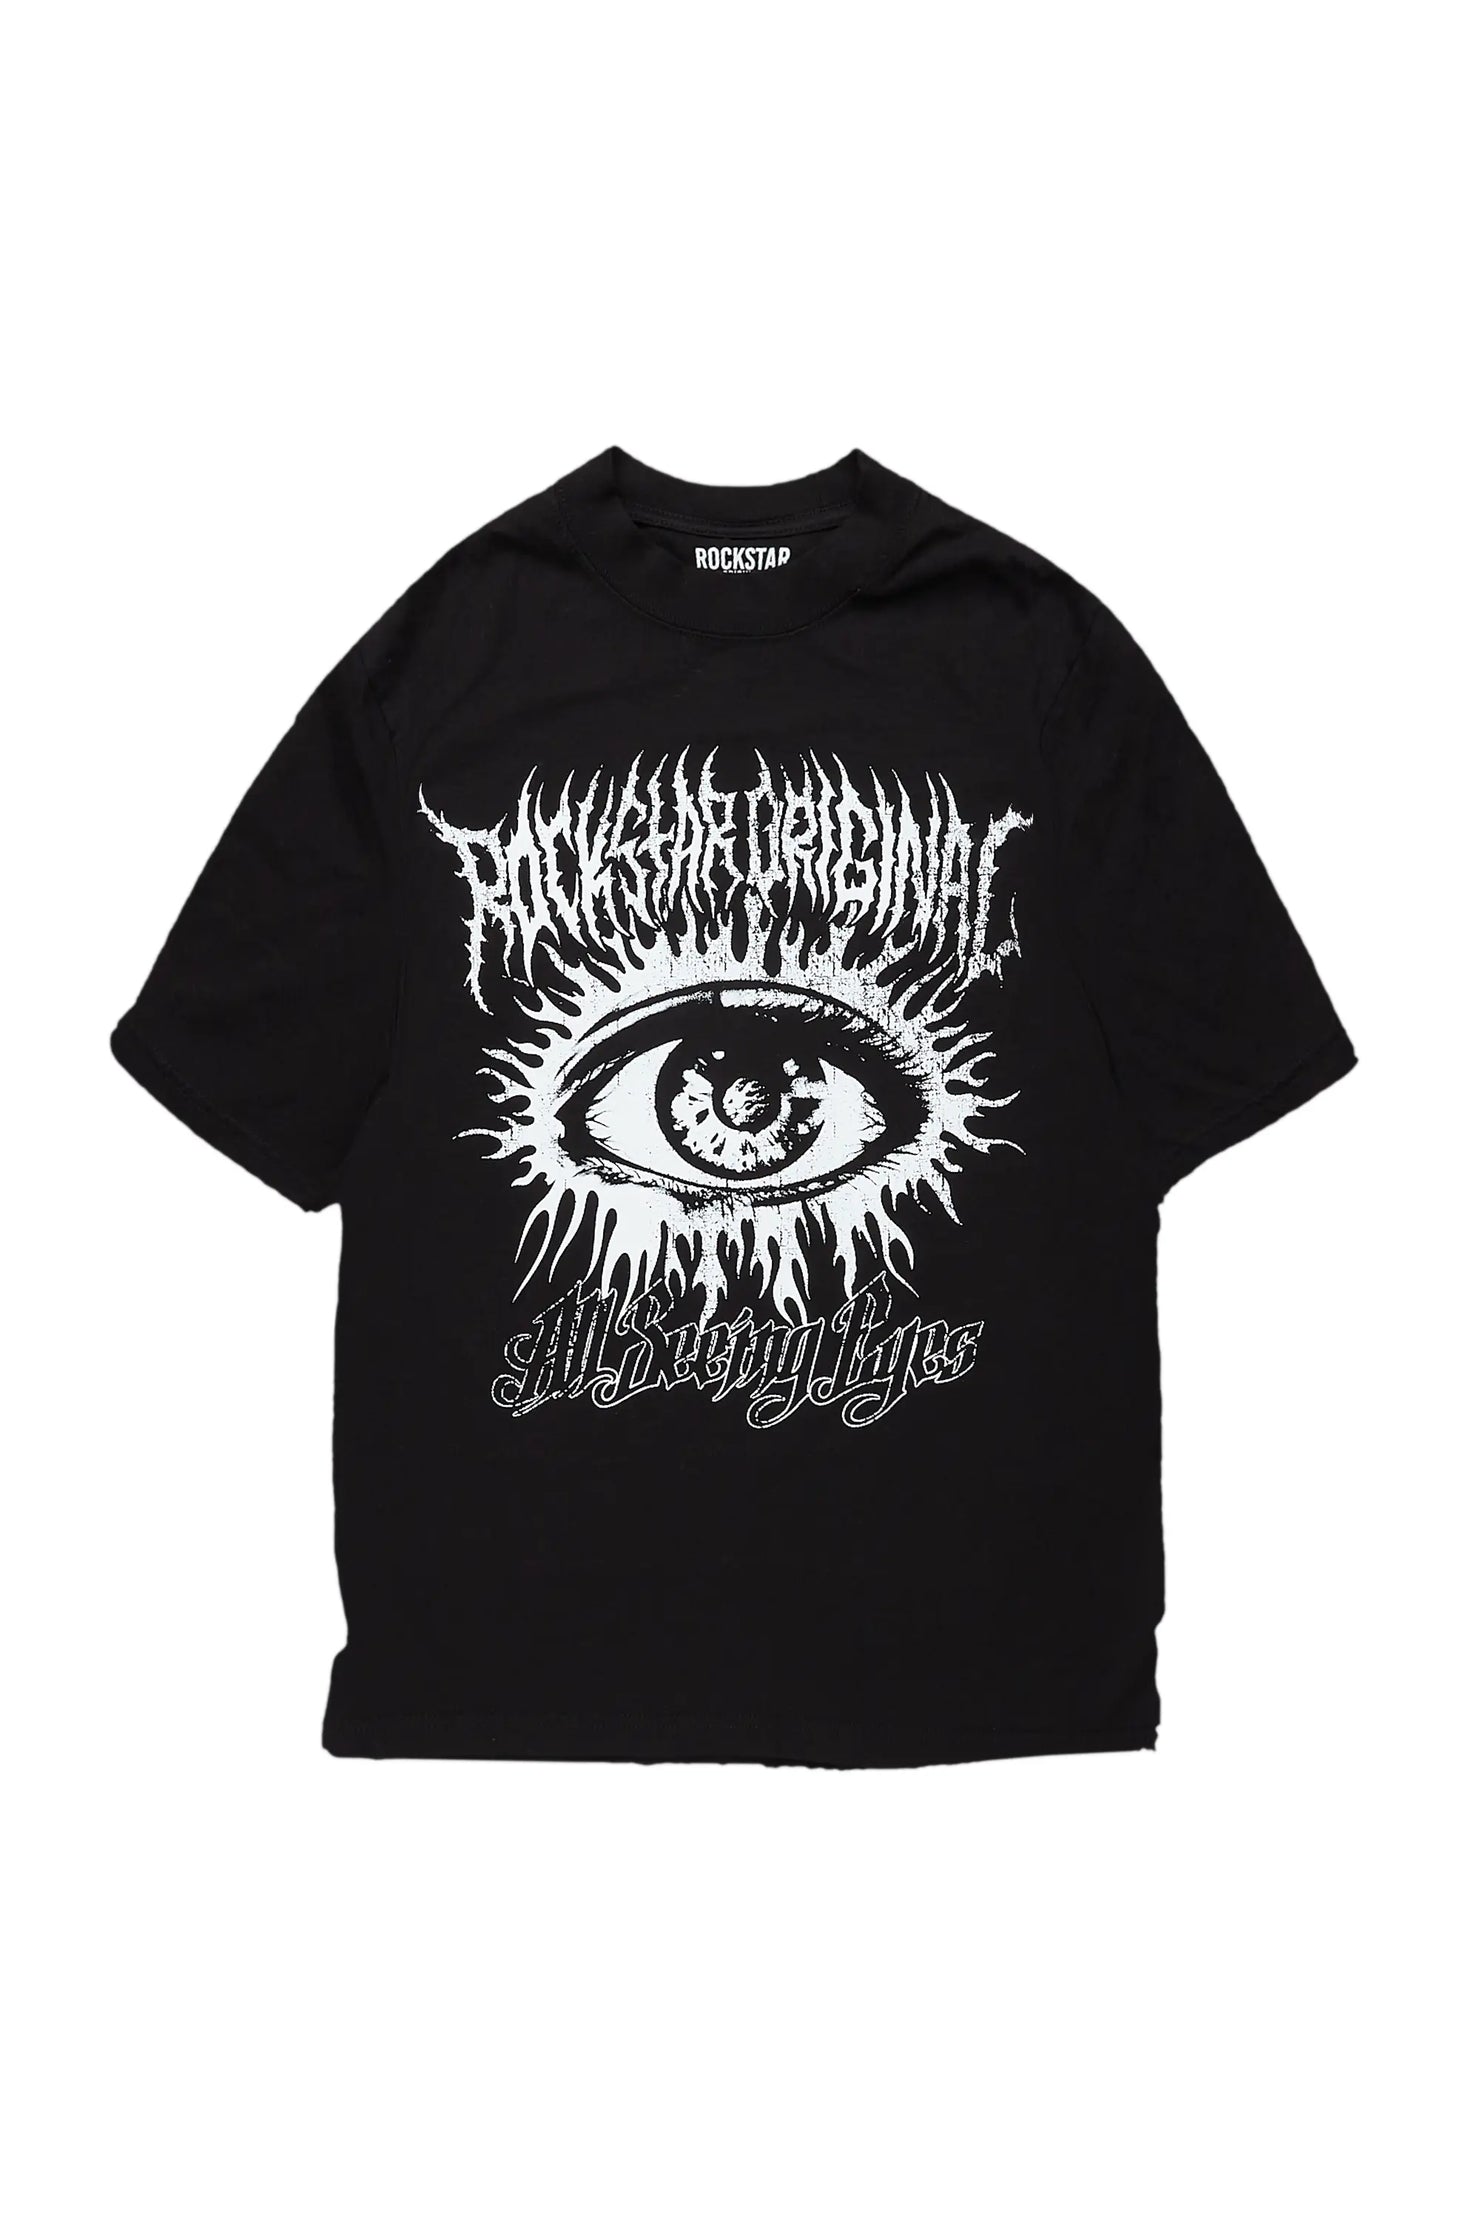 All Seeing Eyes Black Oversized T-Shirt